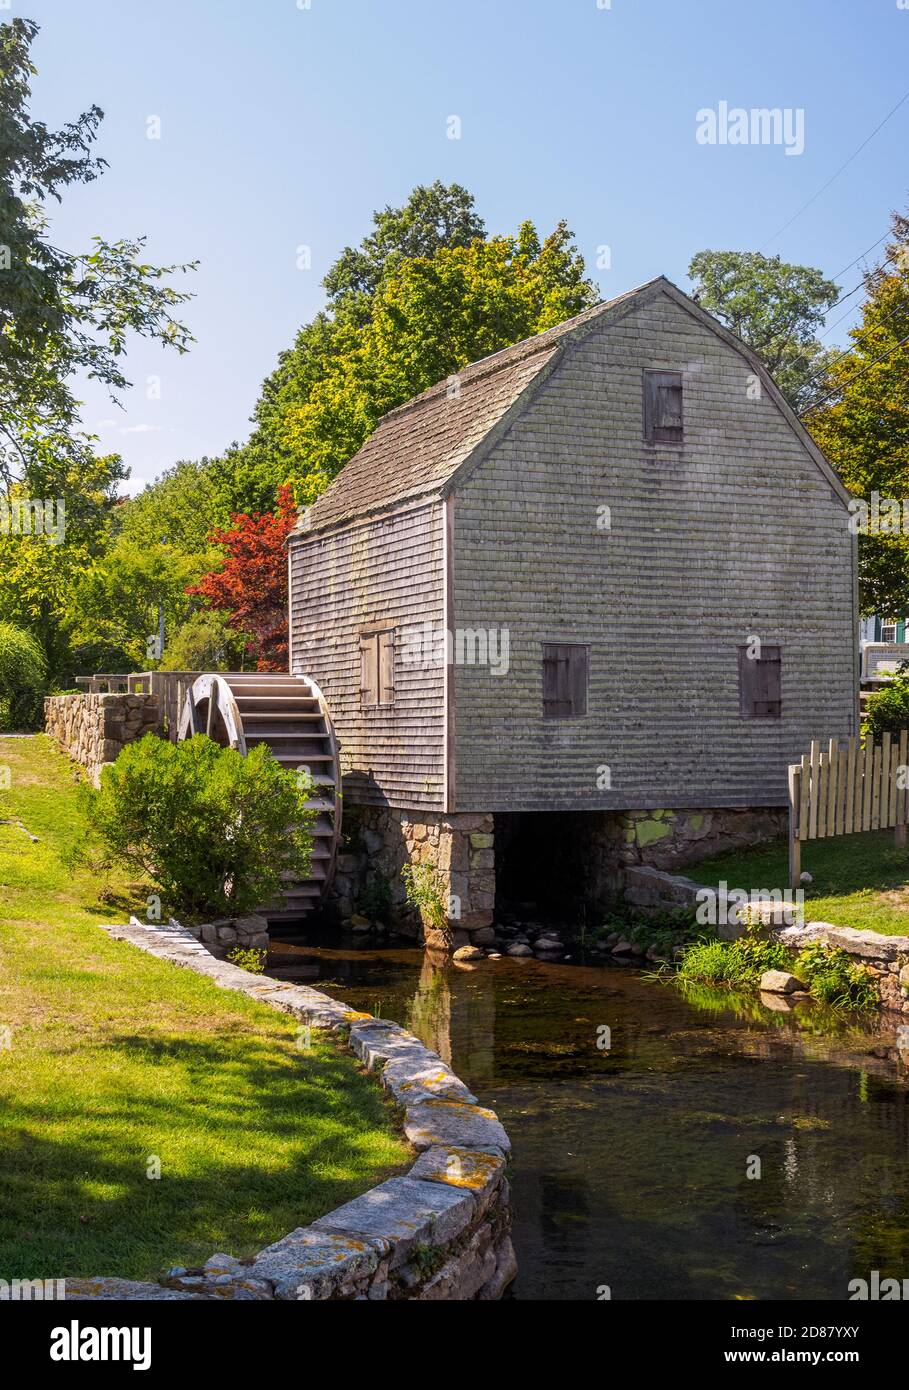 Dexter Grist Mill, Sandwich, Cape Cod Massachusetts USA Seitenansicht mit unterschossenen hölzernen Wasserrad und Millrace Anfang September 2016. Stockfoto